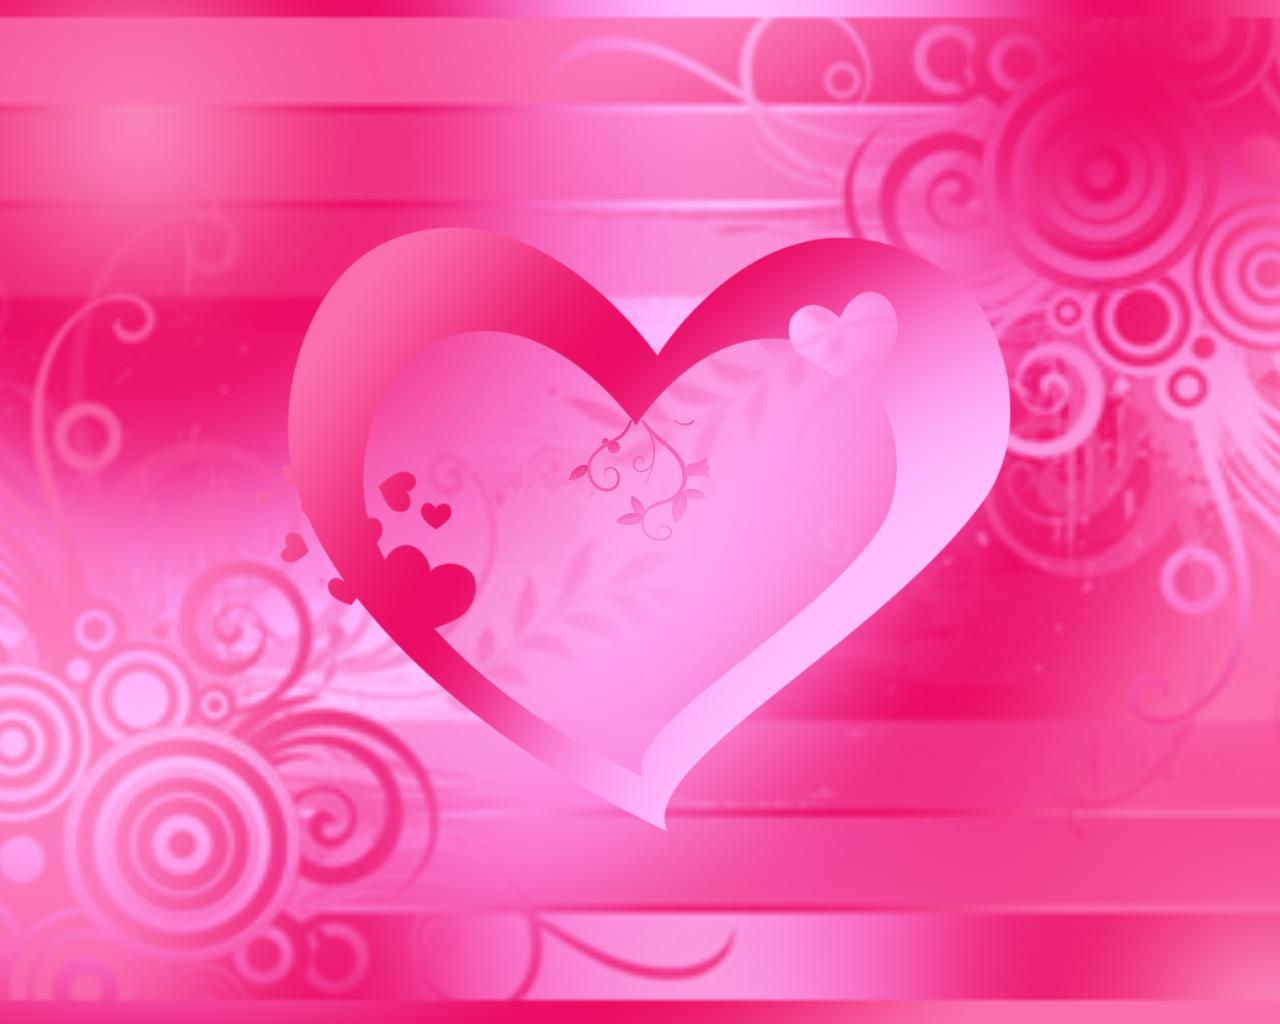 48+] Pink Heart Background Wallpaper - WallpaperSafari